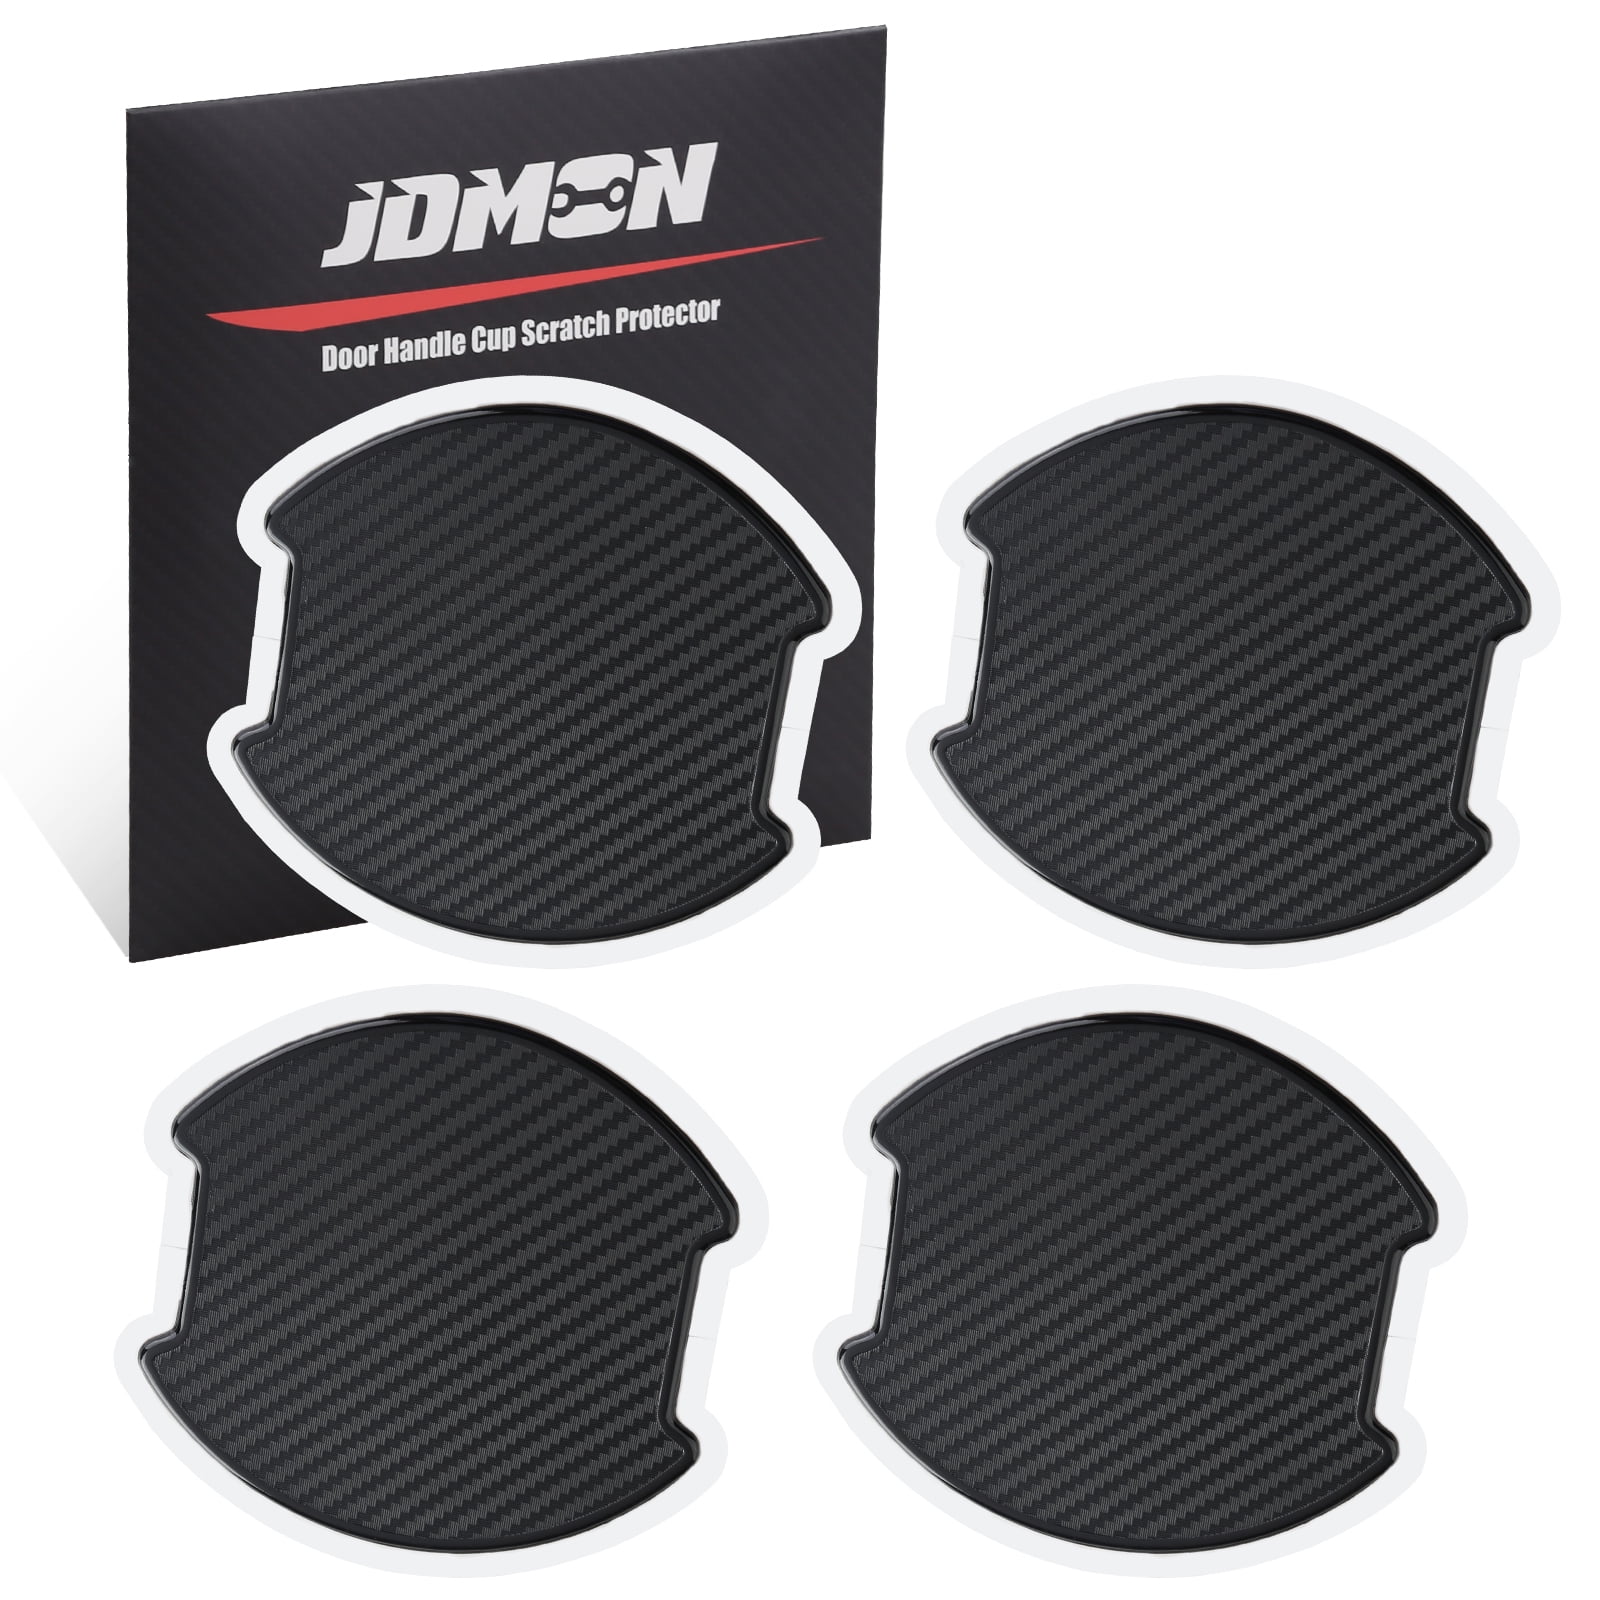 JDMON Car Door Handle Cup Scratch Protector 4Pcs Non-Marking TPU Carbon Fiber Texture Door Bowl 3D Sticker Universal Fit Door Handle Paint Cover Guard L 